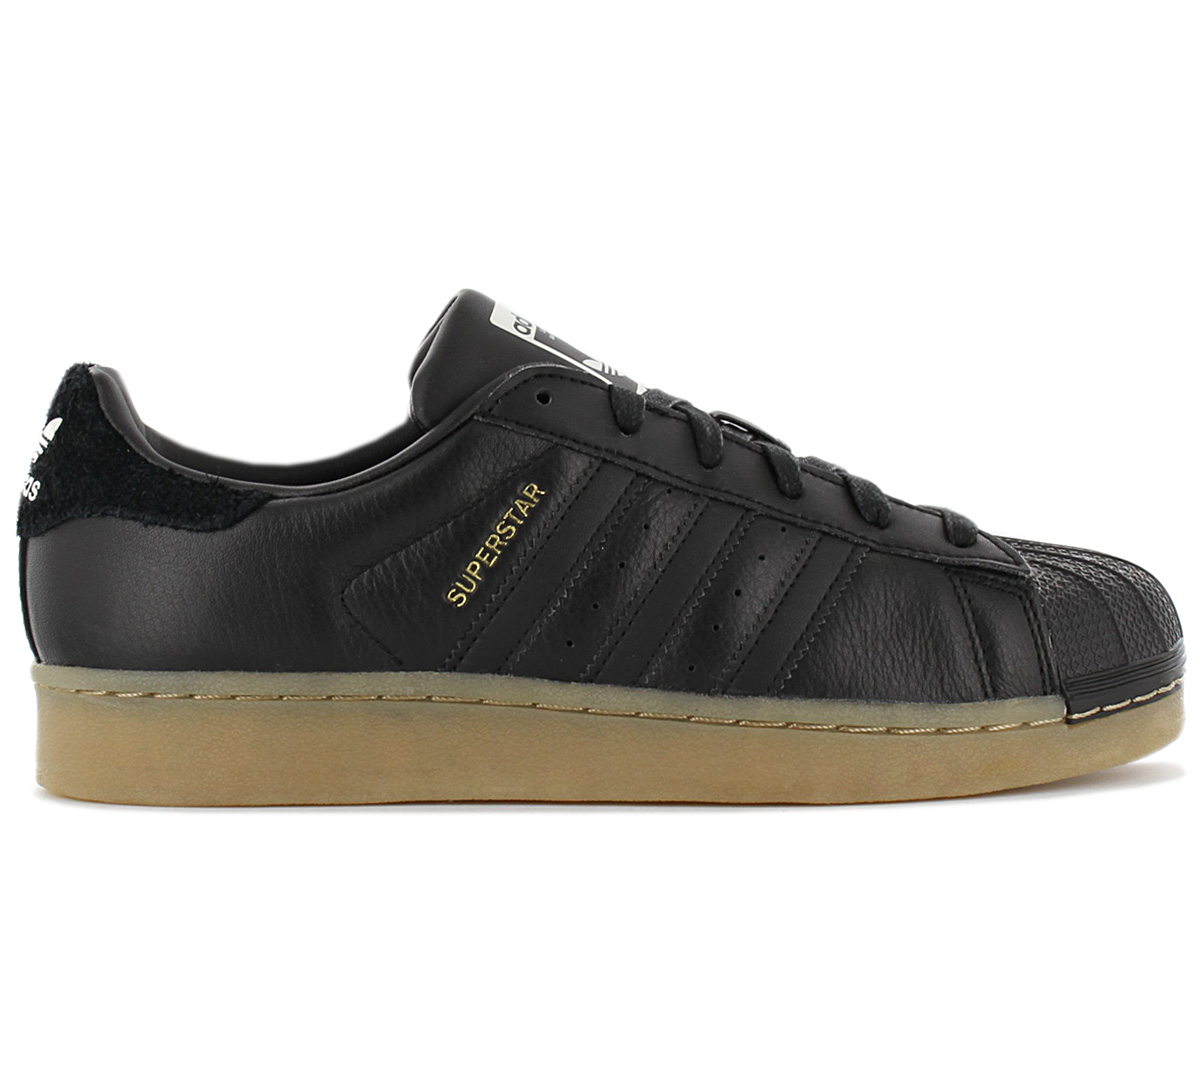 Adidas originals superstar W Women's Sneaker B37148 Trainers Sport Shoes |  eBay